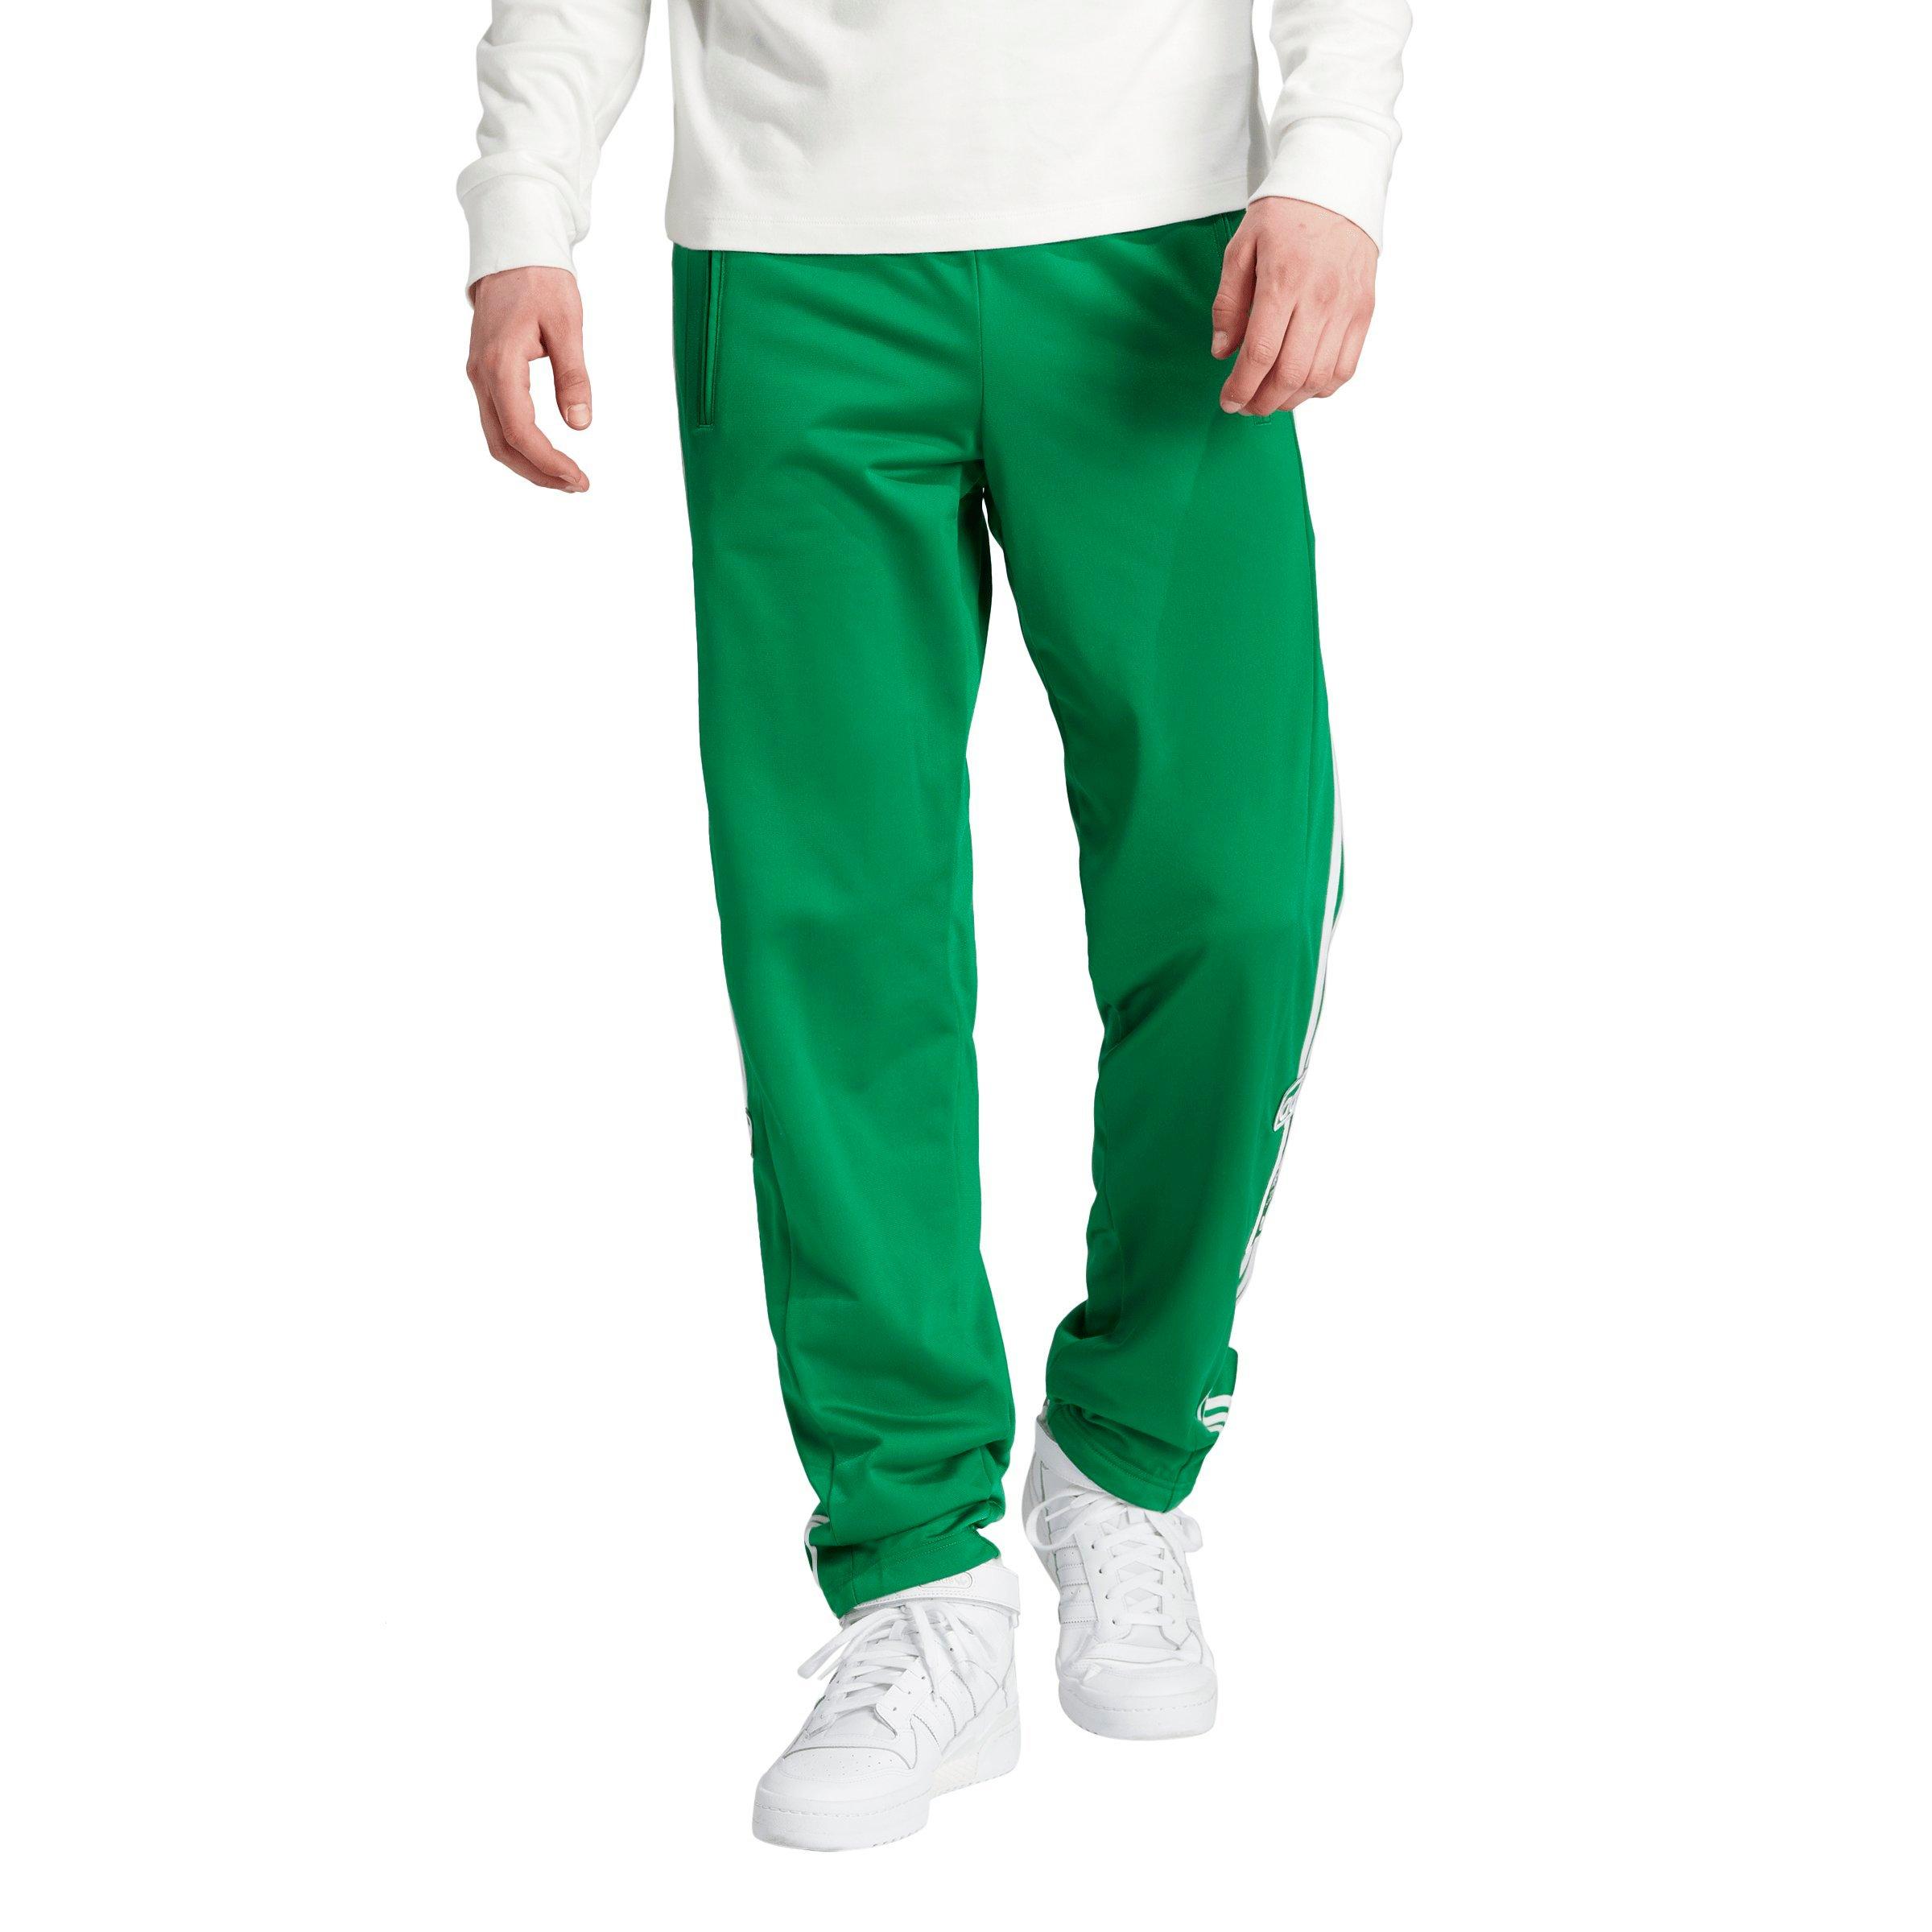 ADIDAS ORIGINALS ADIBREAK PANTS, Green Women's Casual Pants